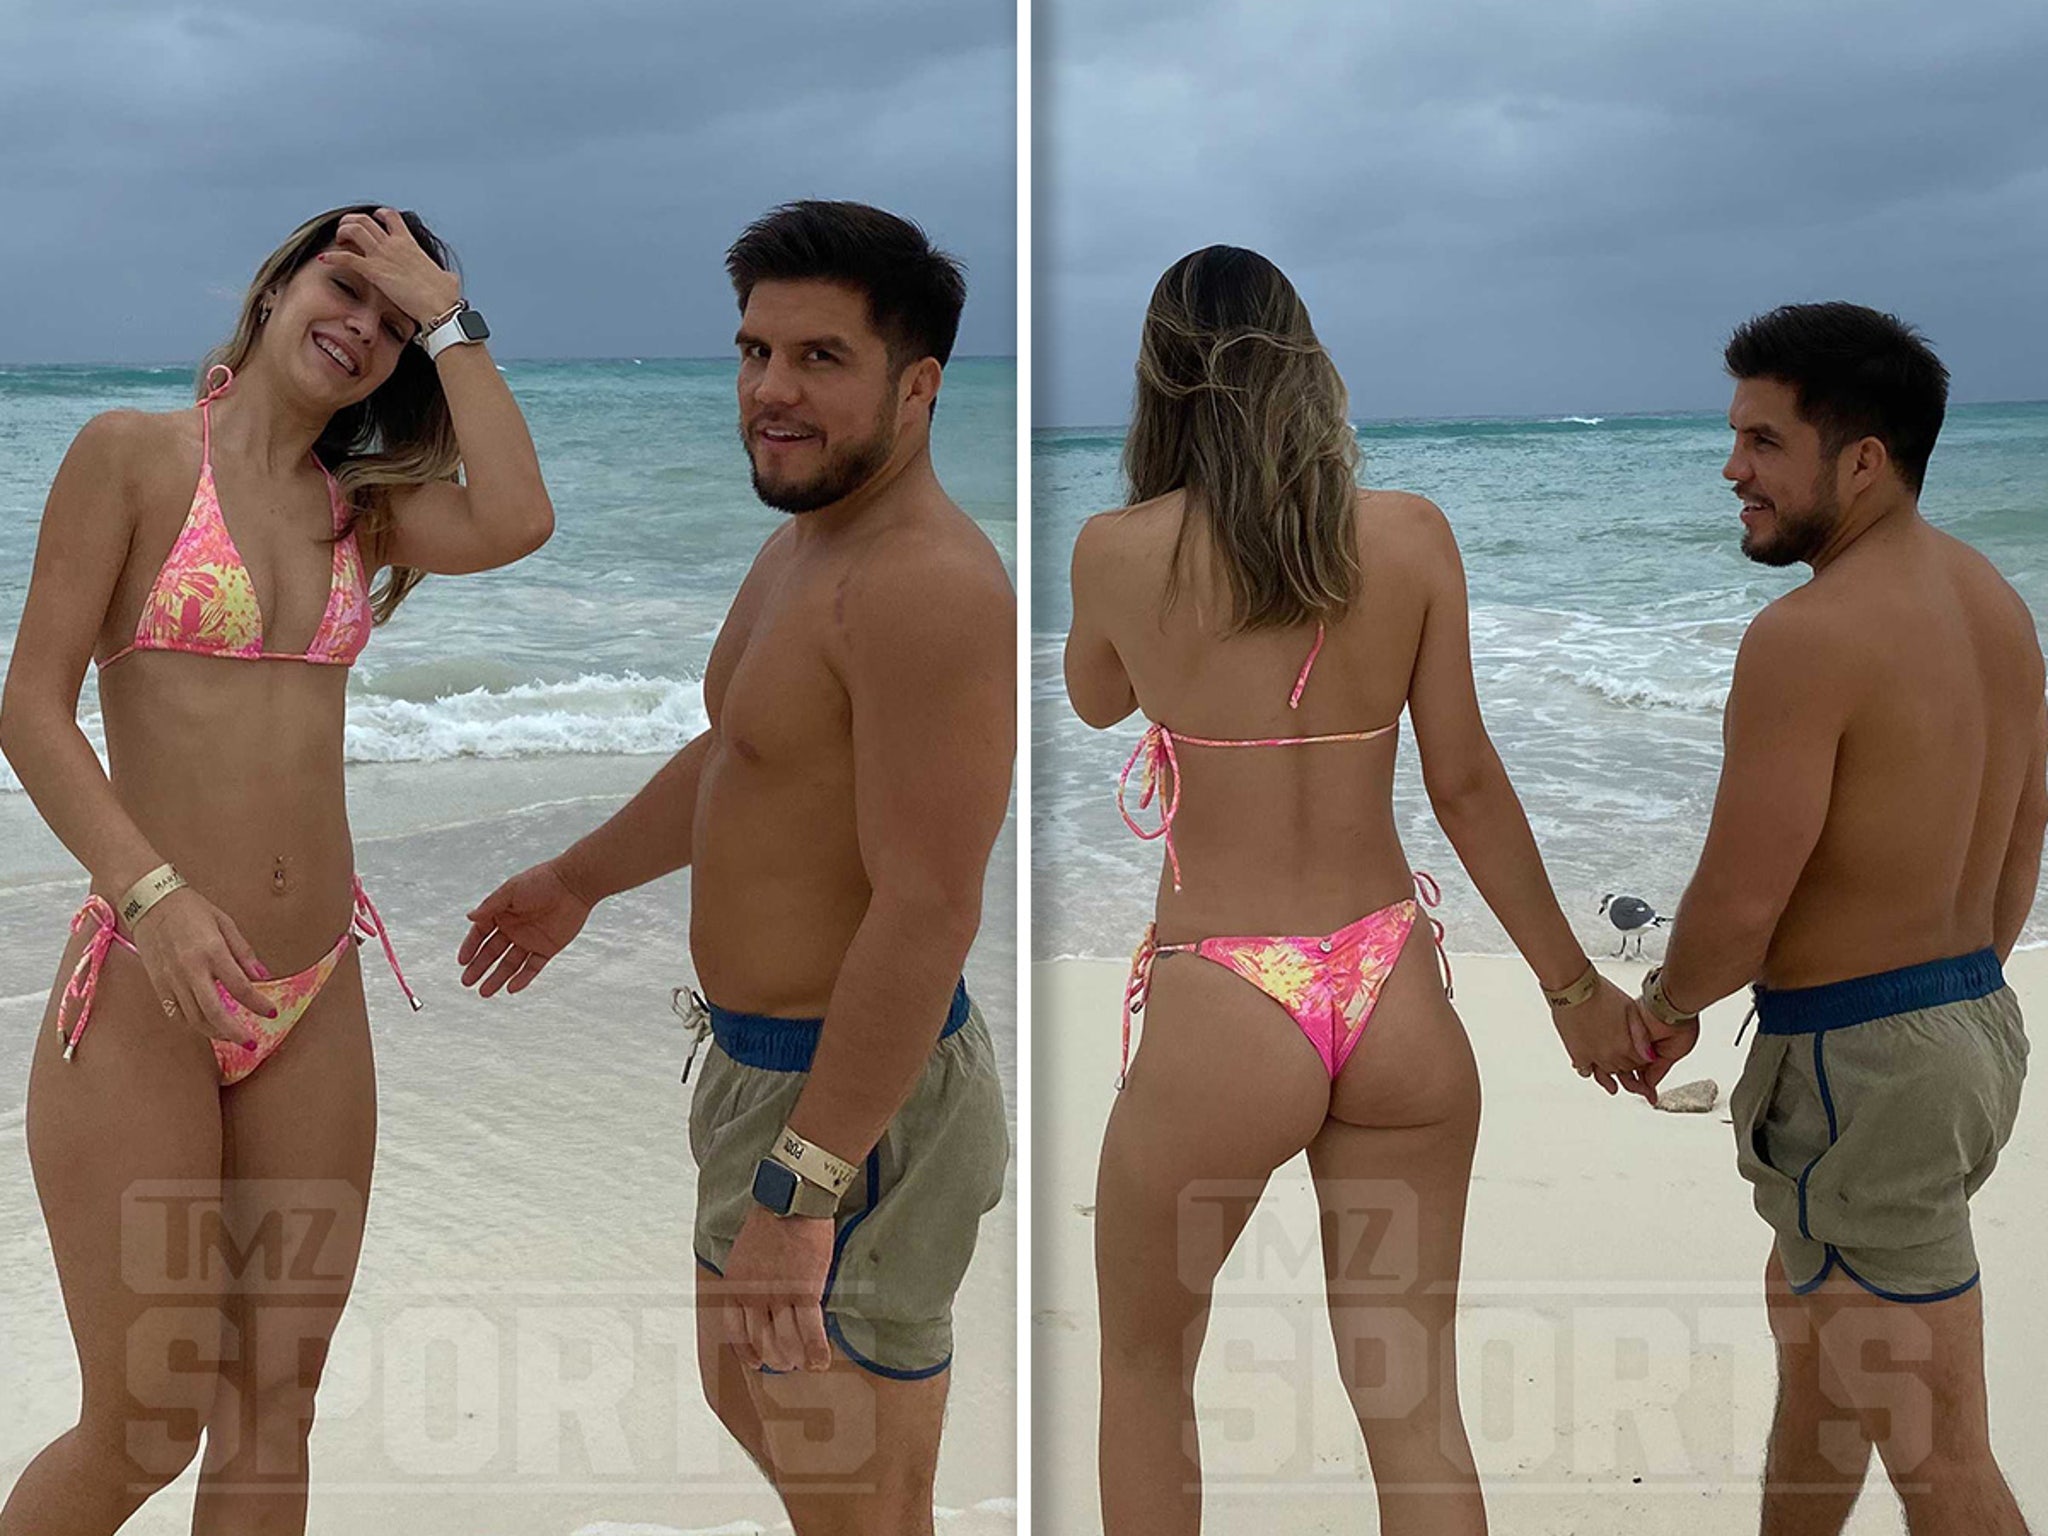 UFCs Henry Cejudo Hits the Beach with Smokin Hot New Lady, Brazilian Model!